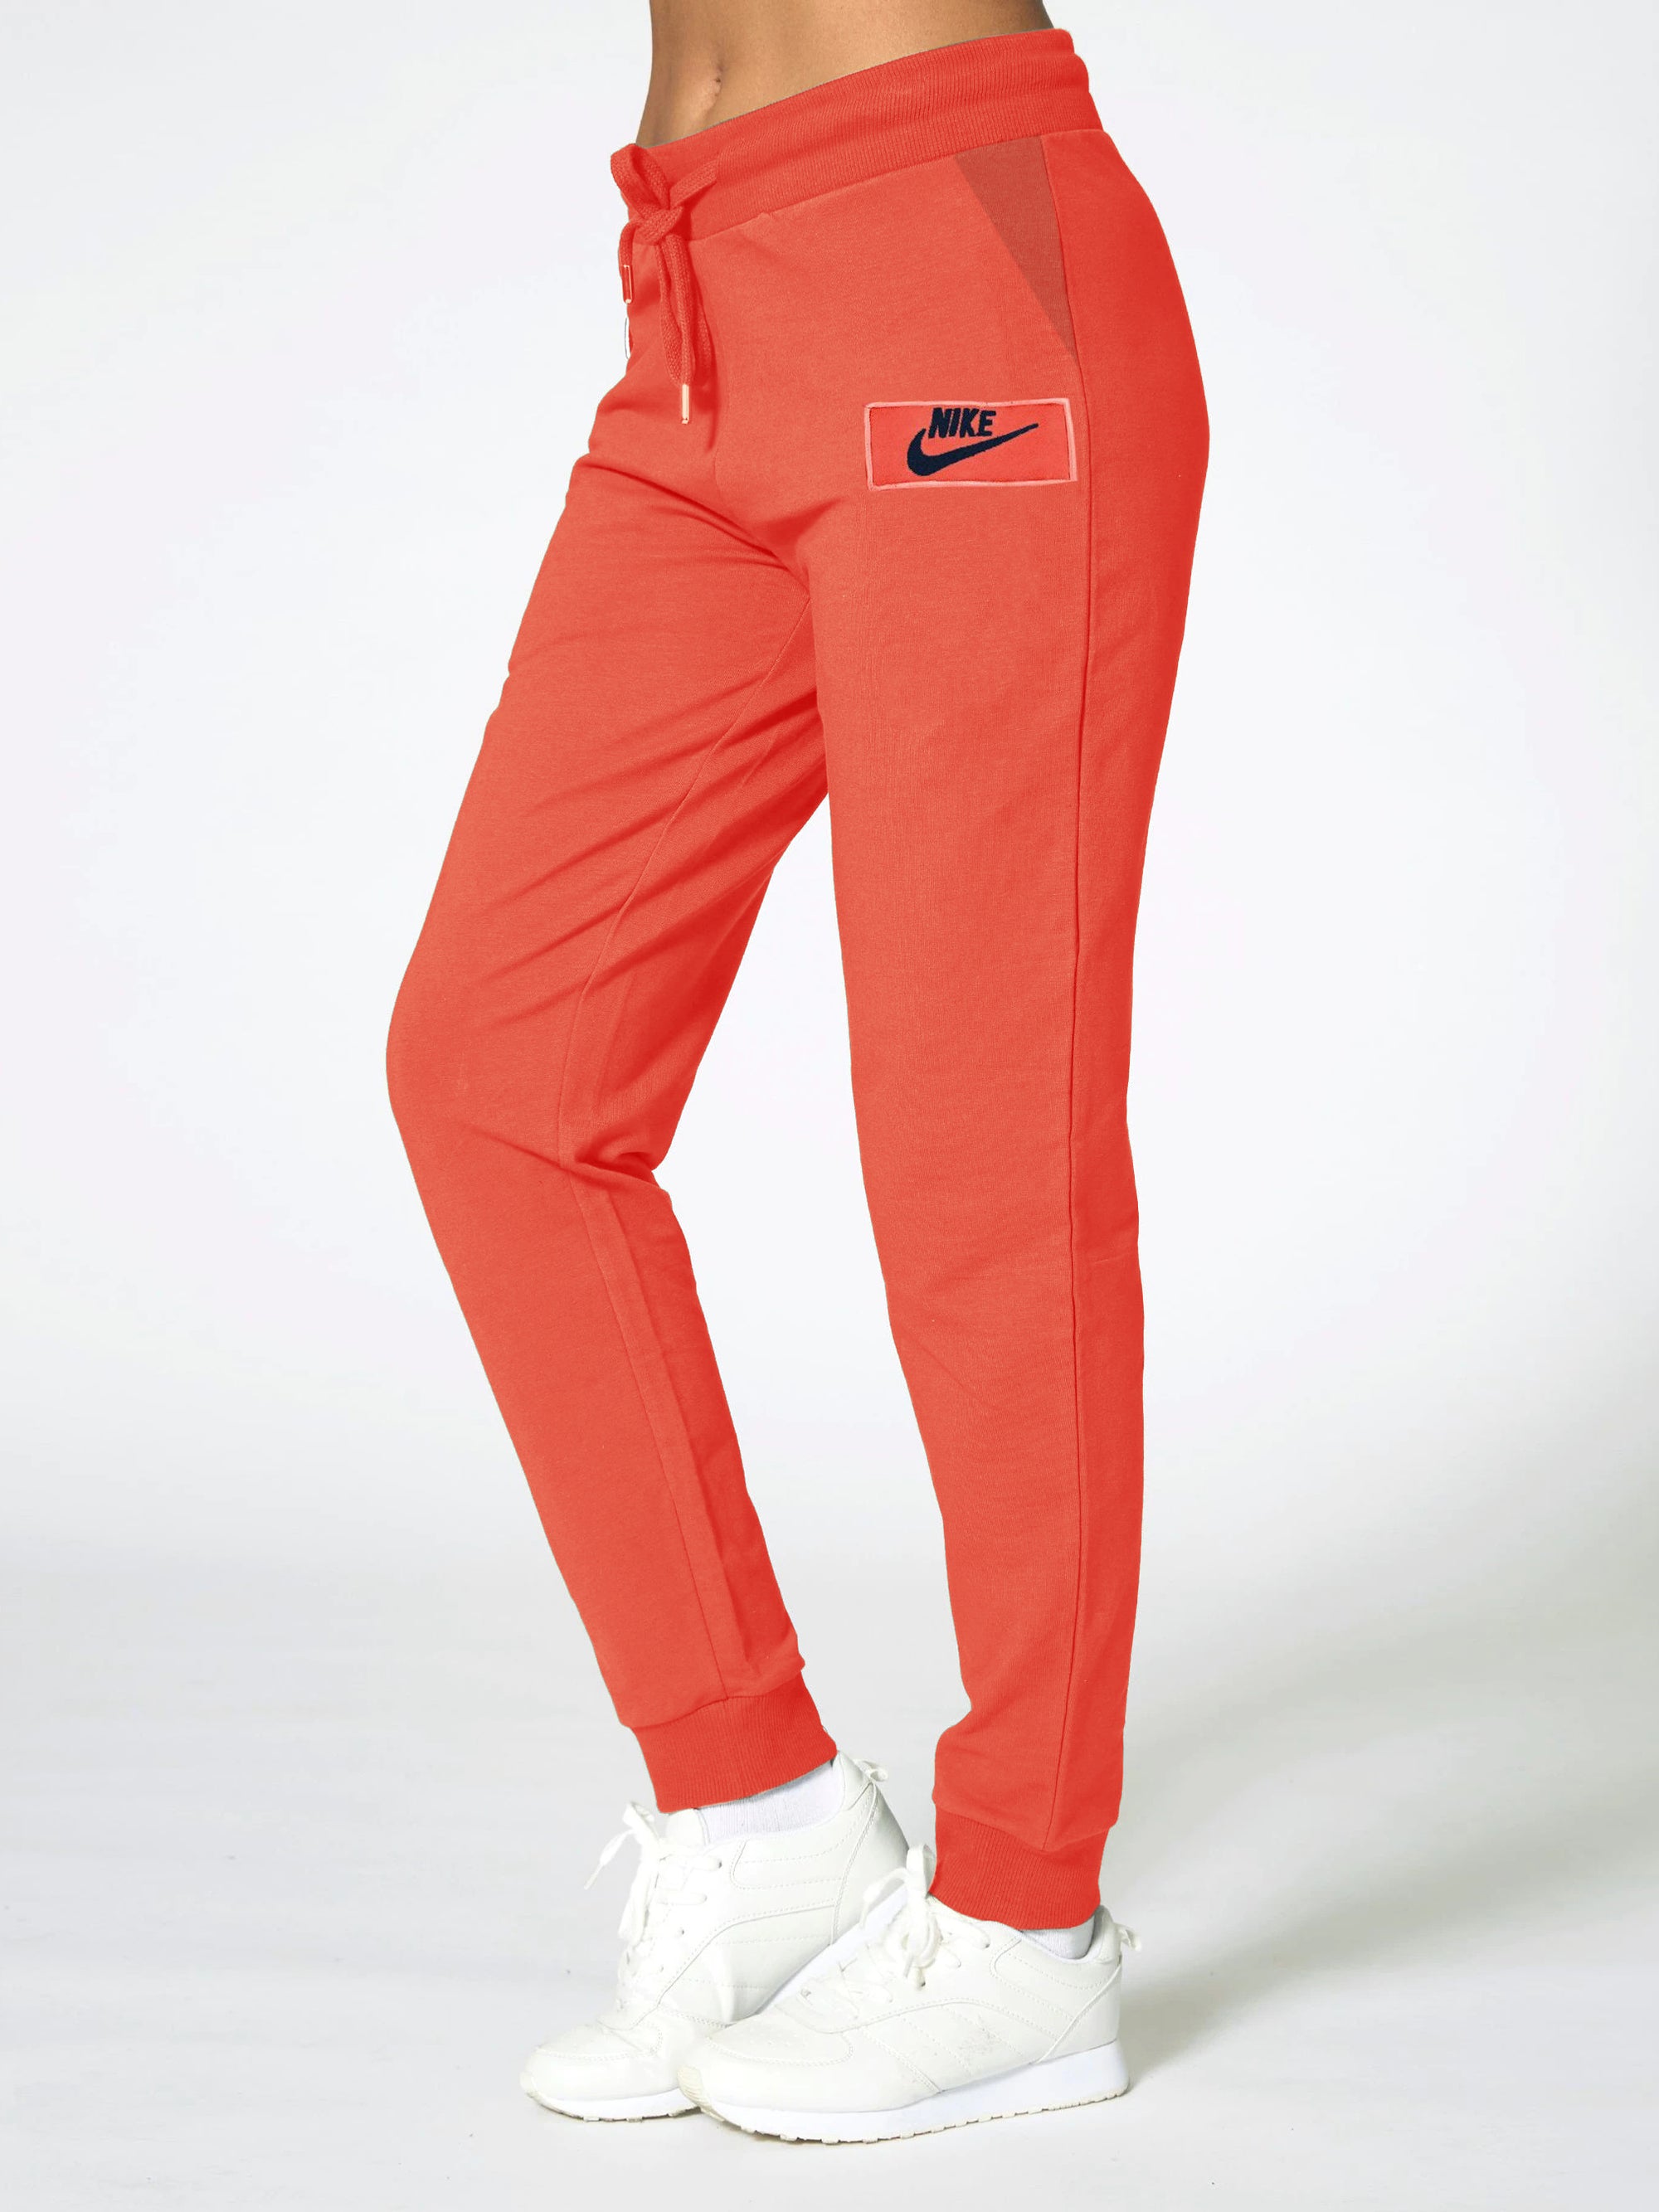 NK Fleece Slim Fit Trouser For Ladies-Orange-SP679